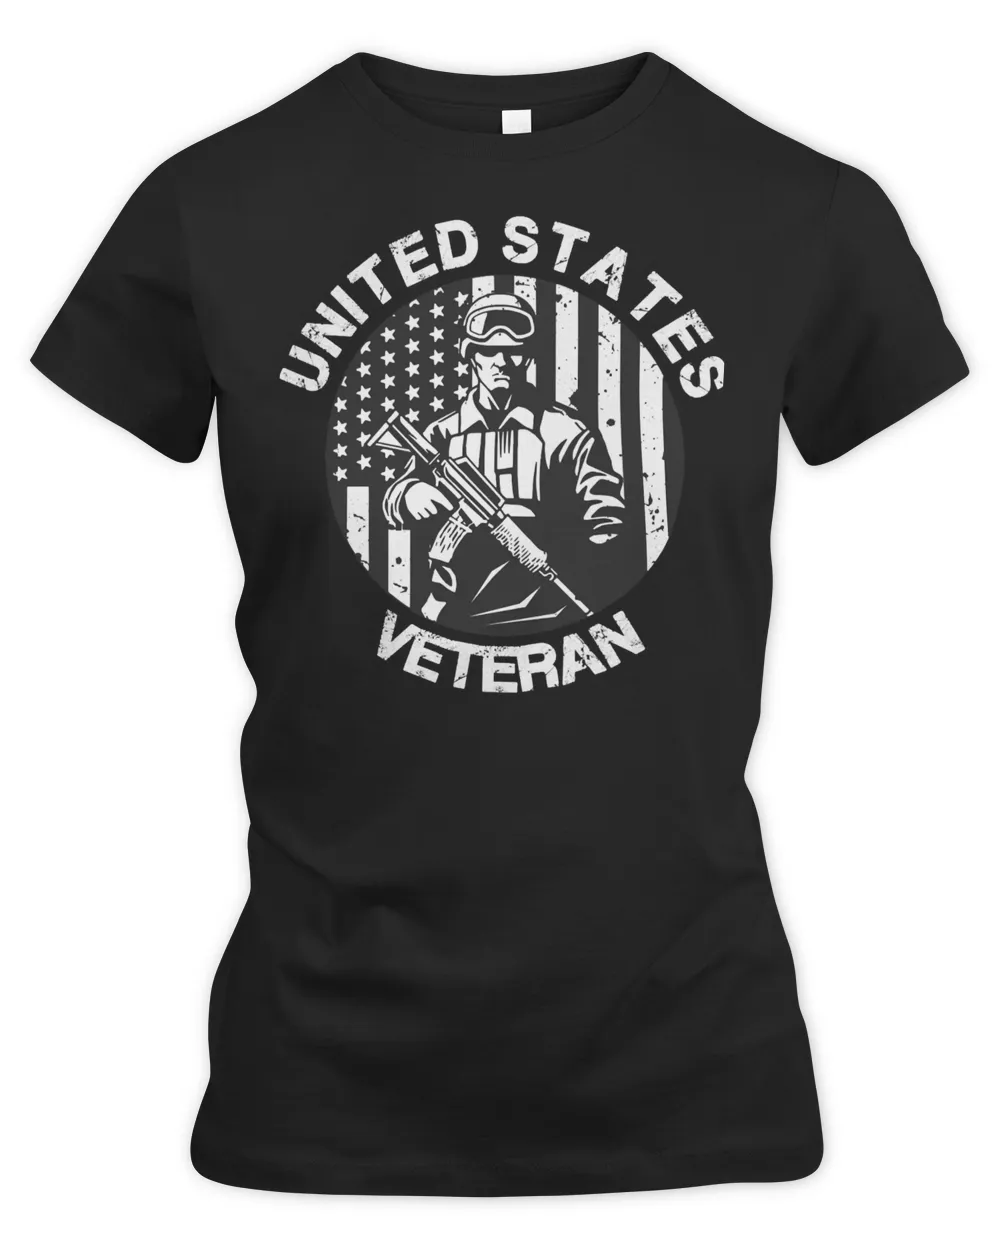 Veteran Veterans Day United States Veteran 628 navy soldier army military